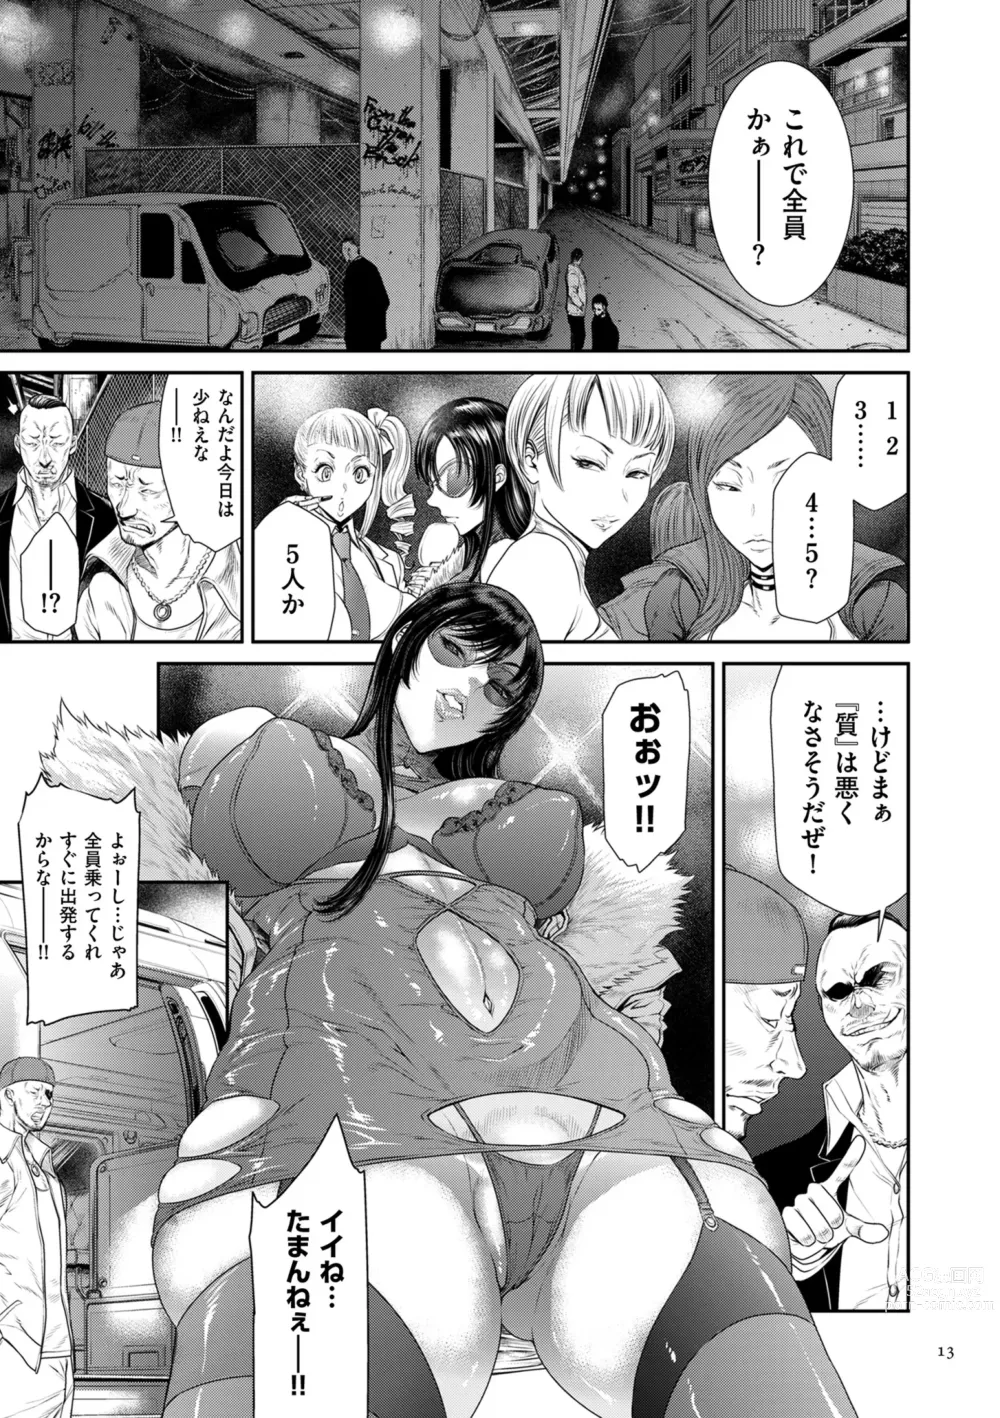 Page 13 of manga P. S. C. Sennyuu sousa-kan Reiko